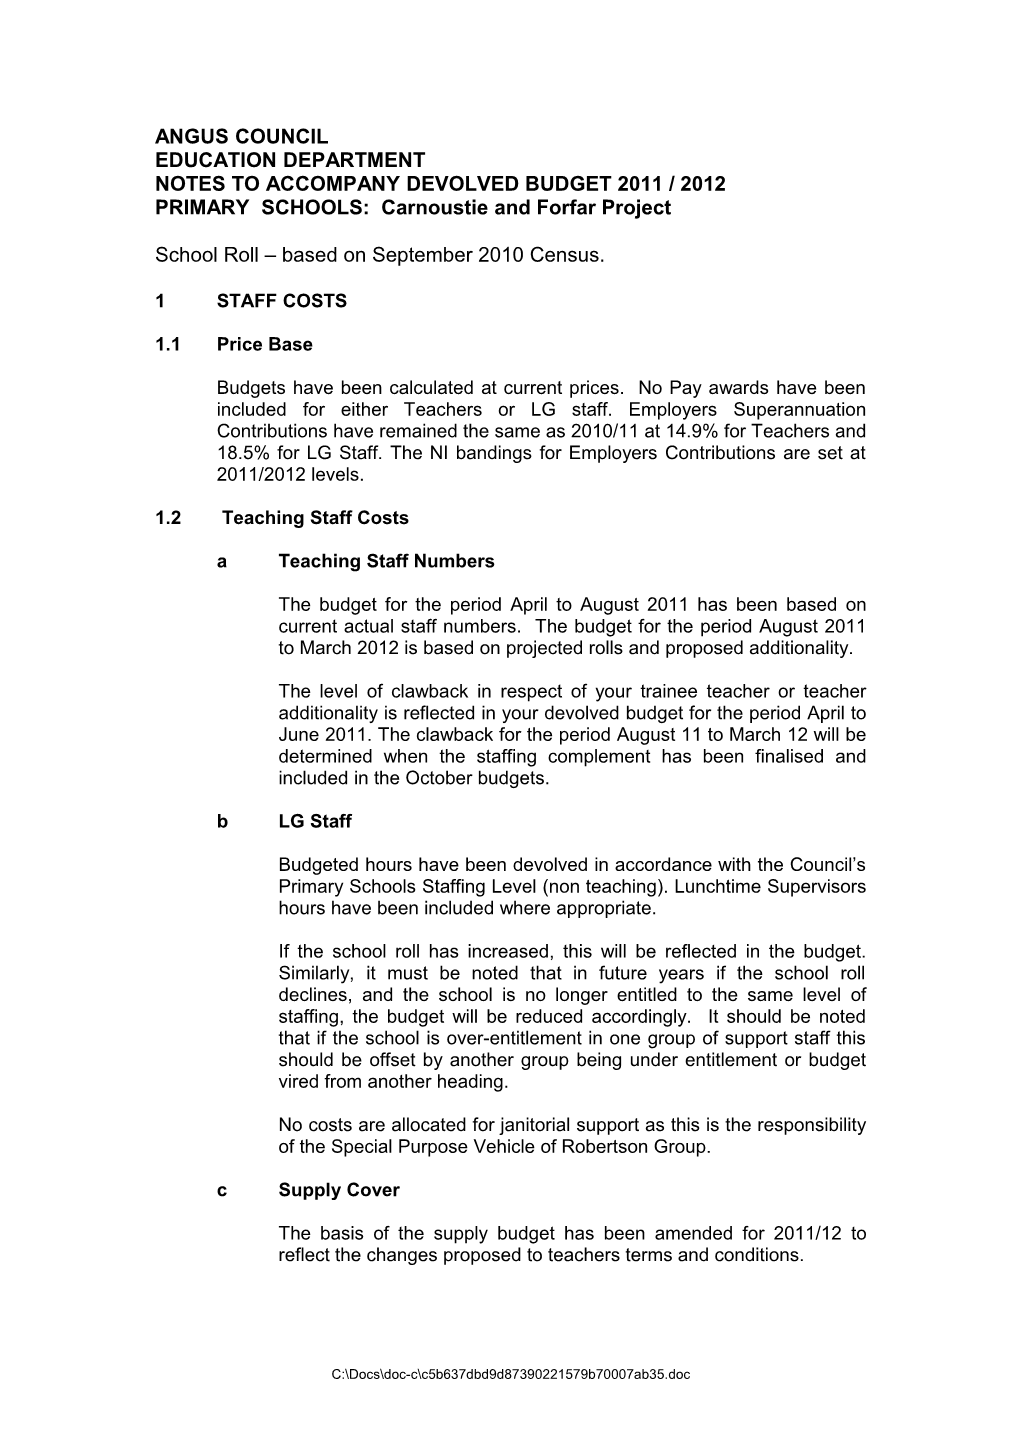 Notes to Accompany Devolved Budget 2011 / 2012